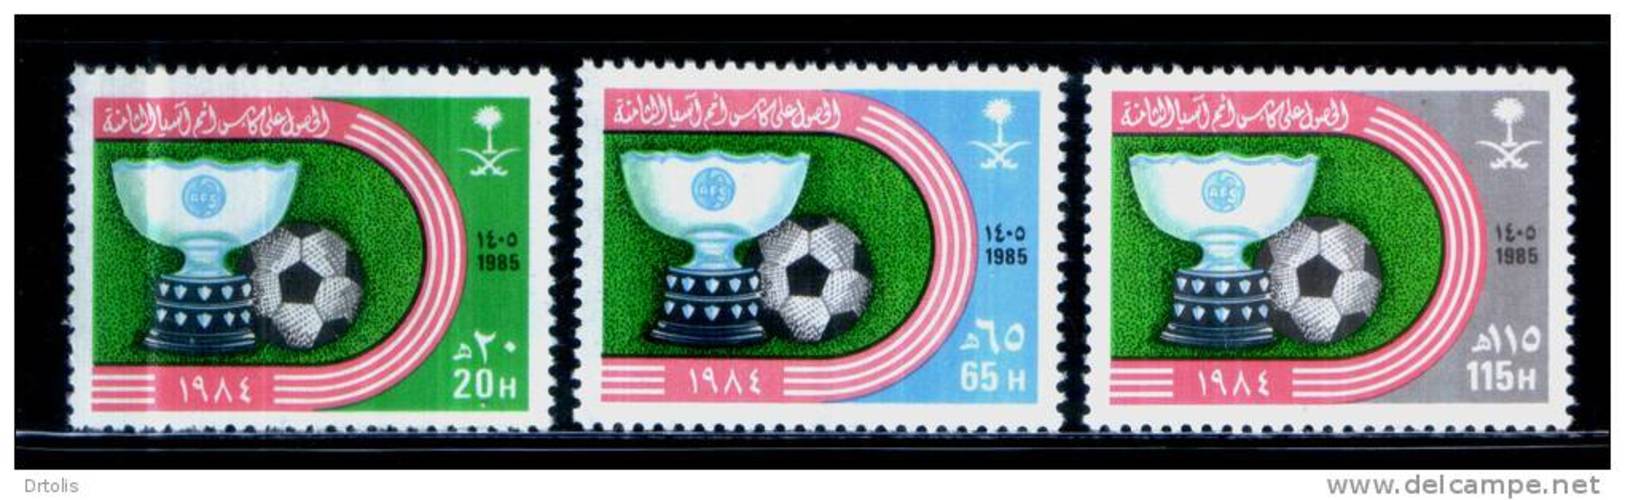 SAUDI ARABIA / SPORT /  FOOTBALL / ASIAN FOOTBALL CUP CHAMPIONSHIP / MNH / VF - AFC Asian Cup